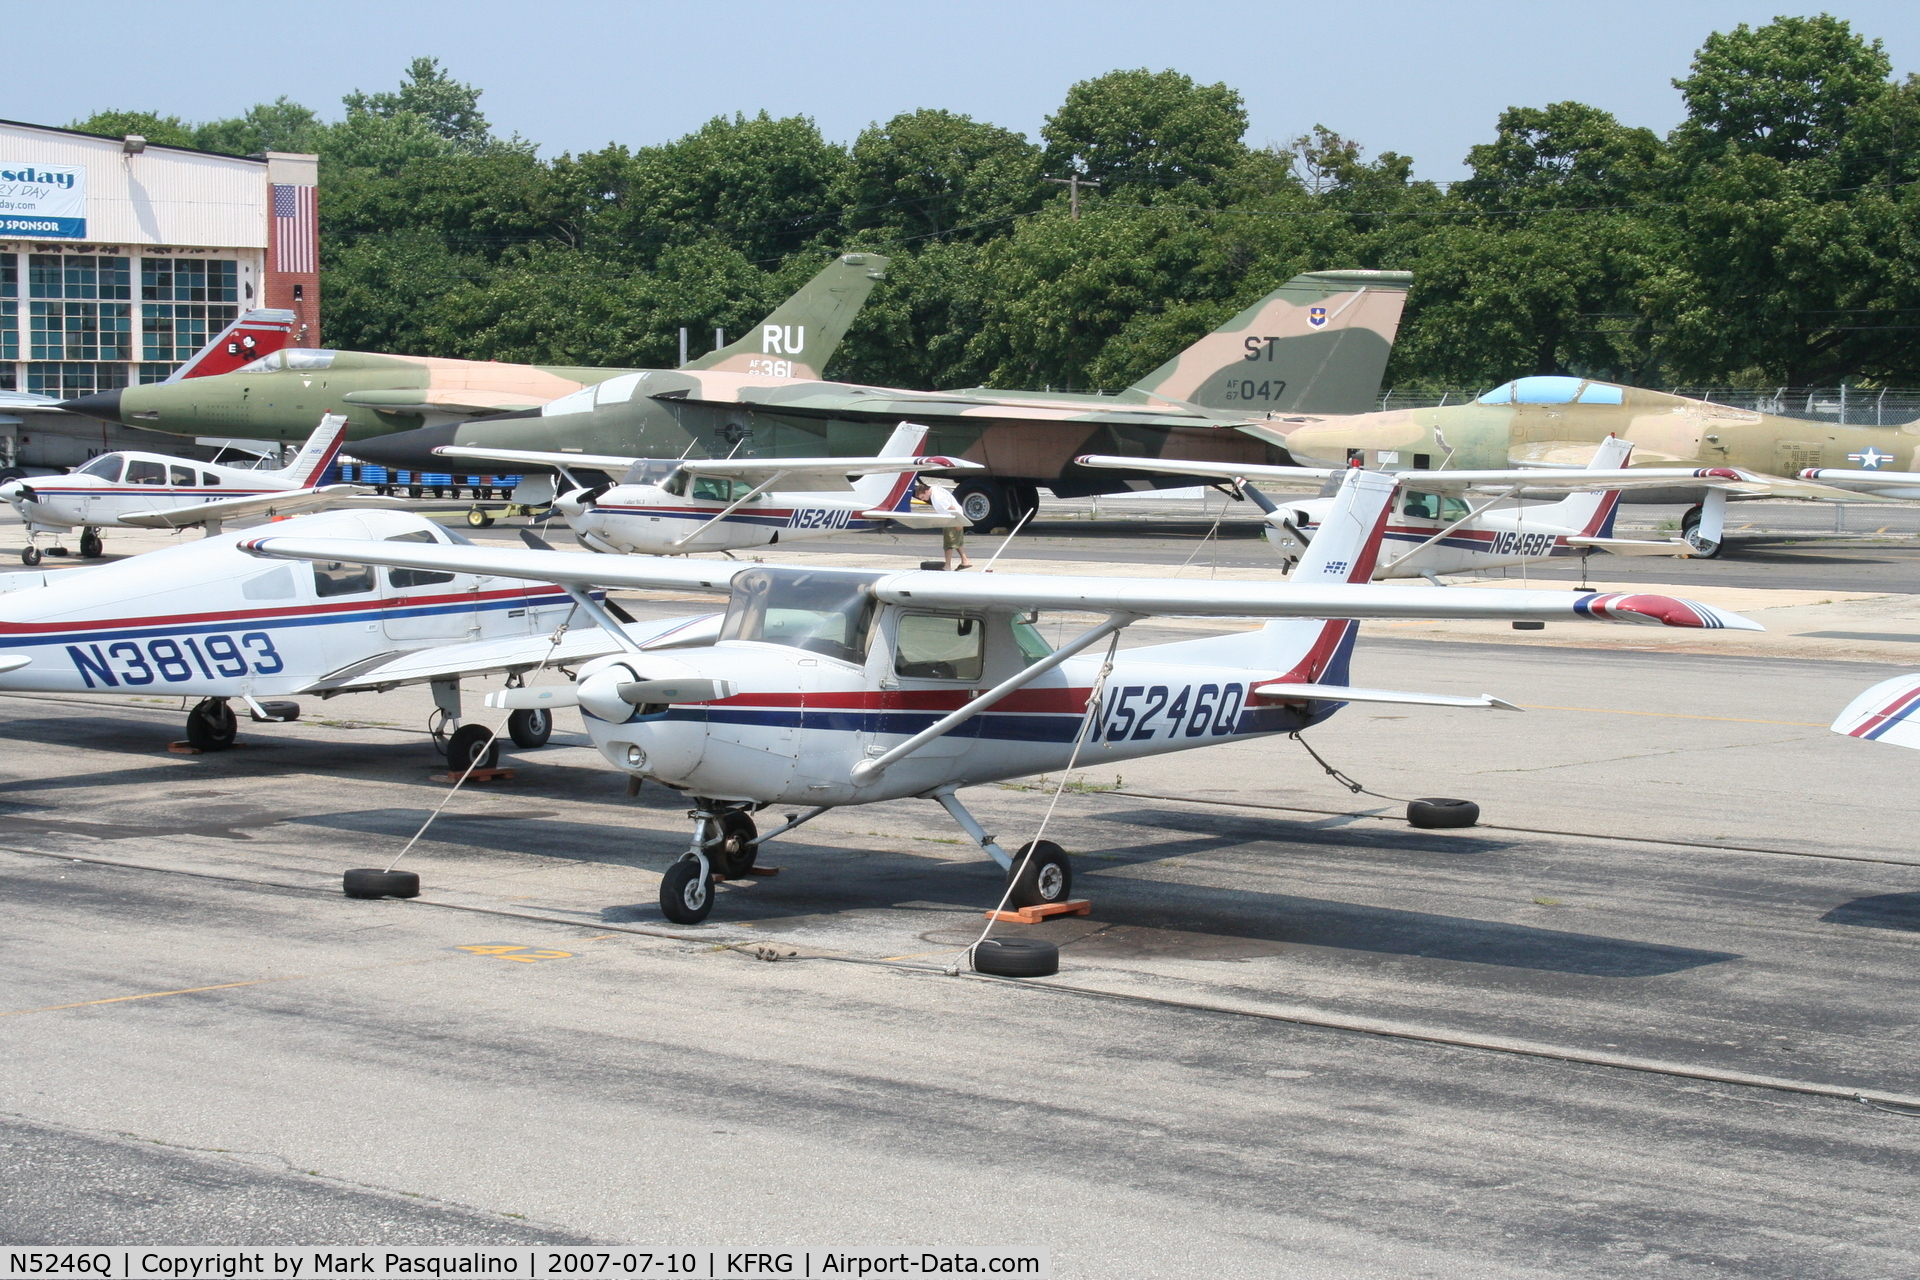 N5246Q, 1981 Cessna 152 C/N 15285092, Cessna 152